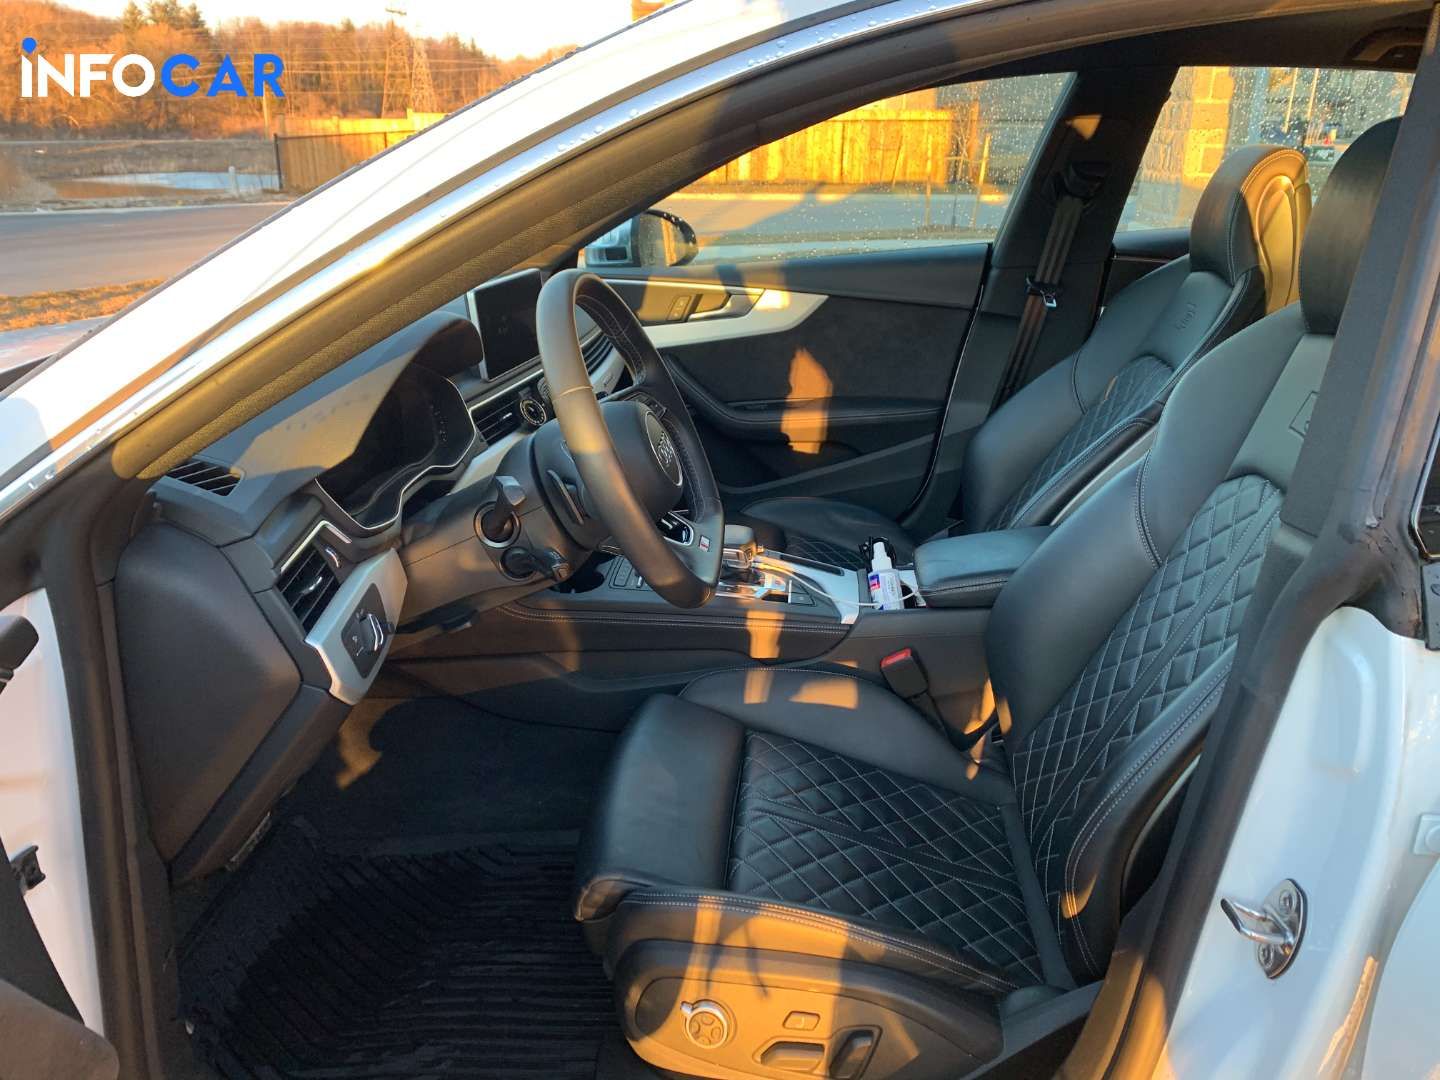 2018 Audi S5 Sportback - INFOCAR - Toronto Auto Trading Platform